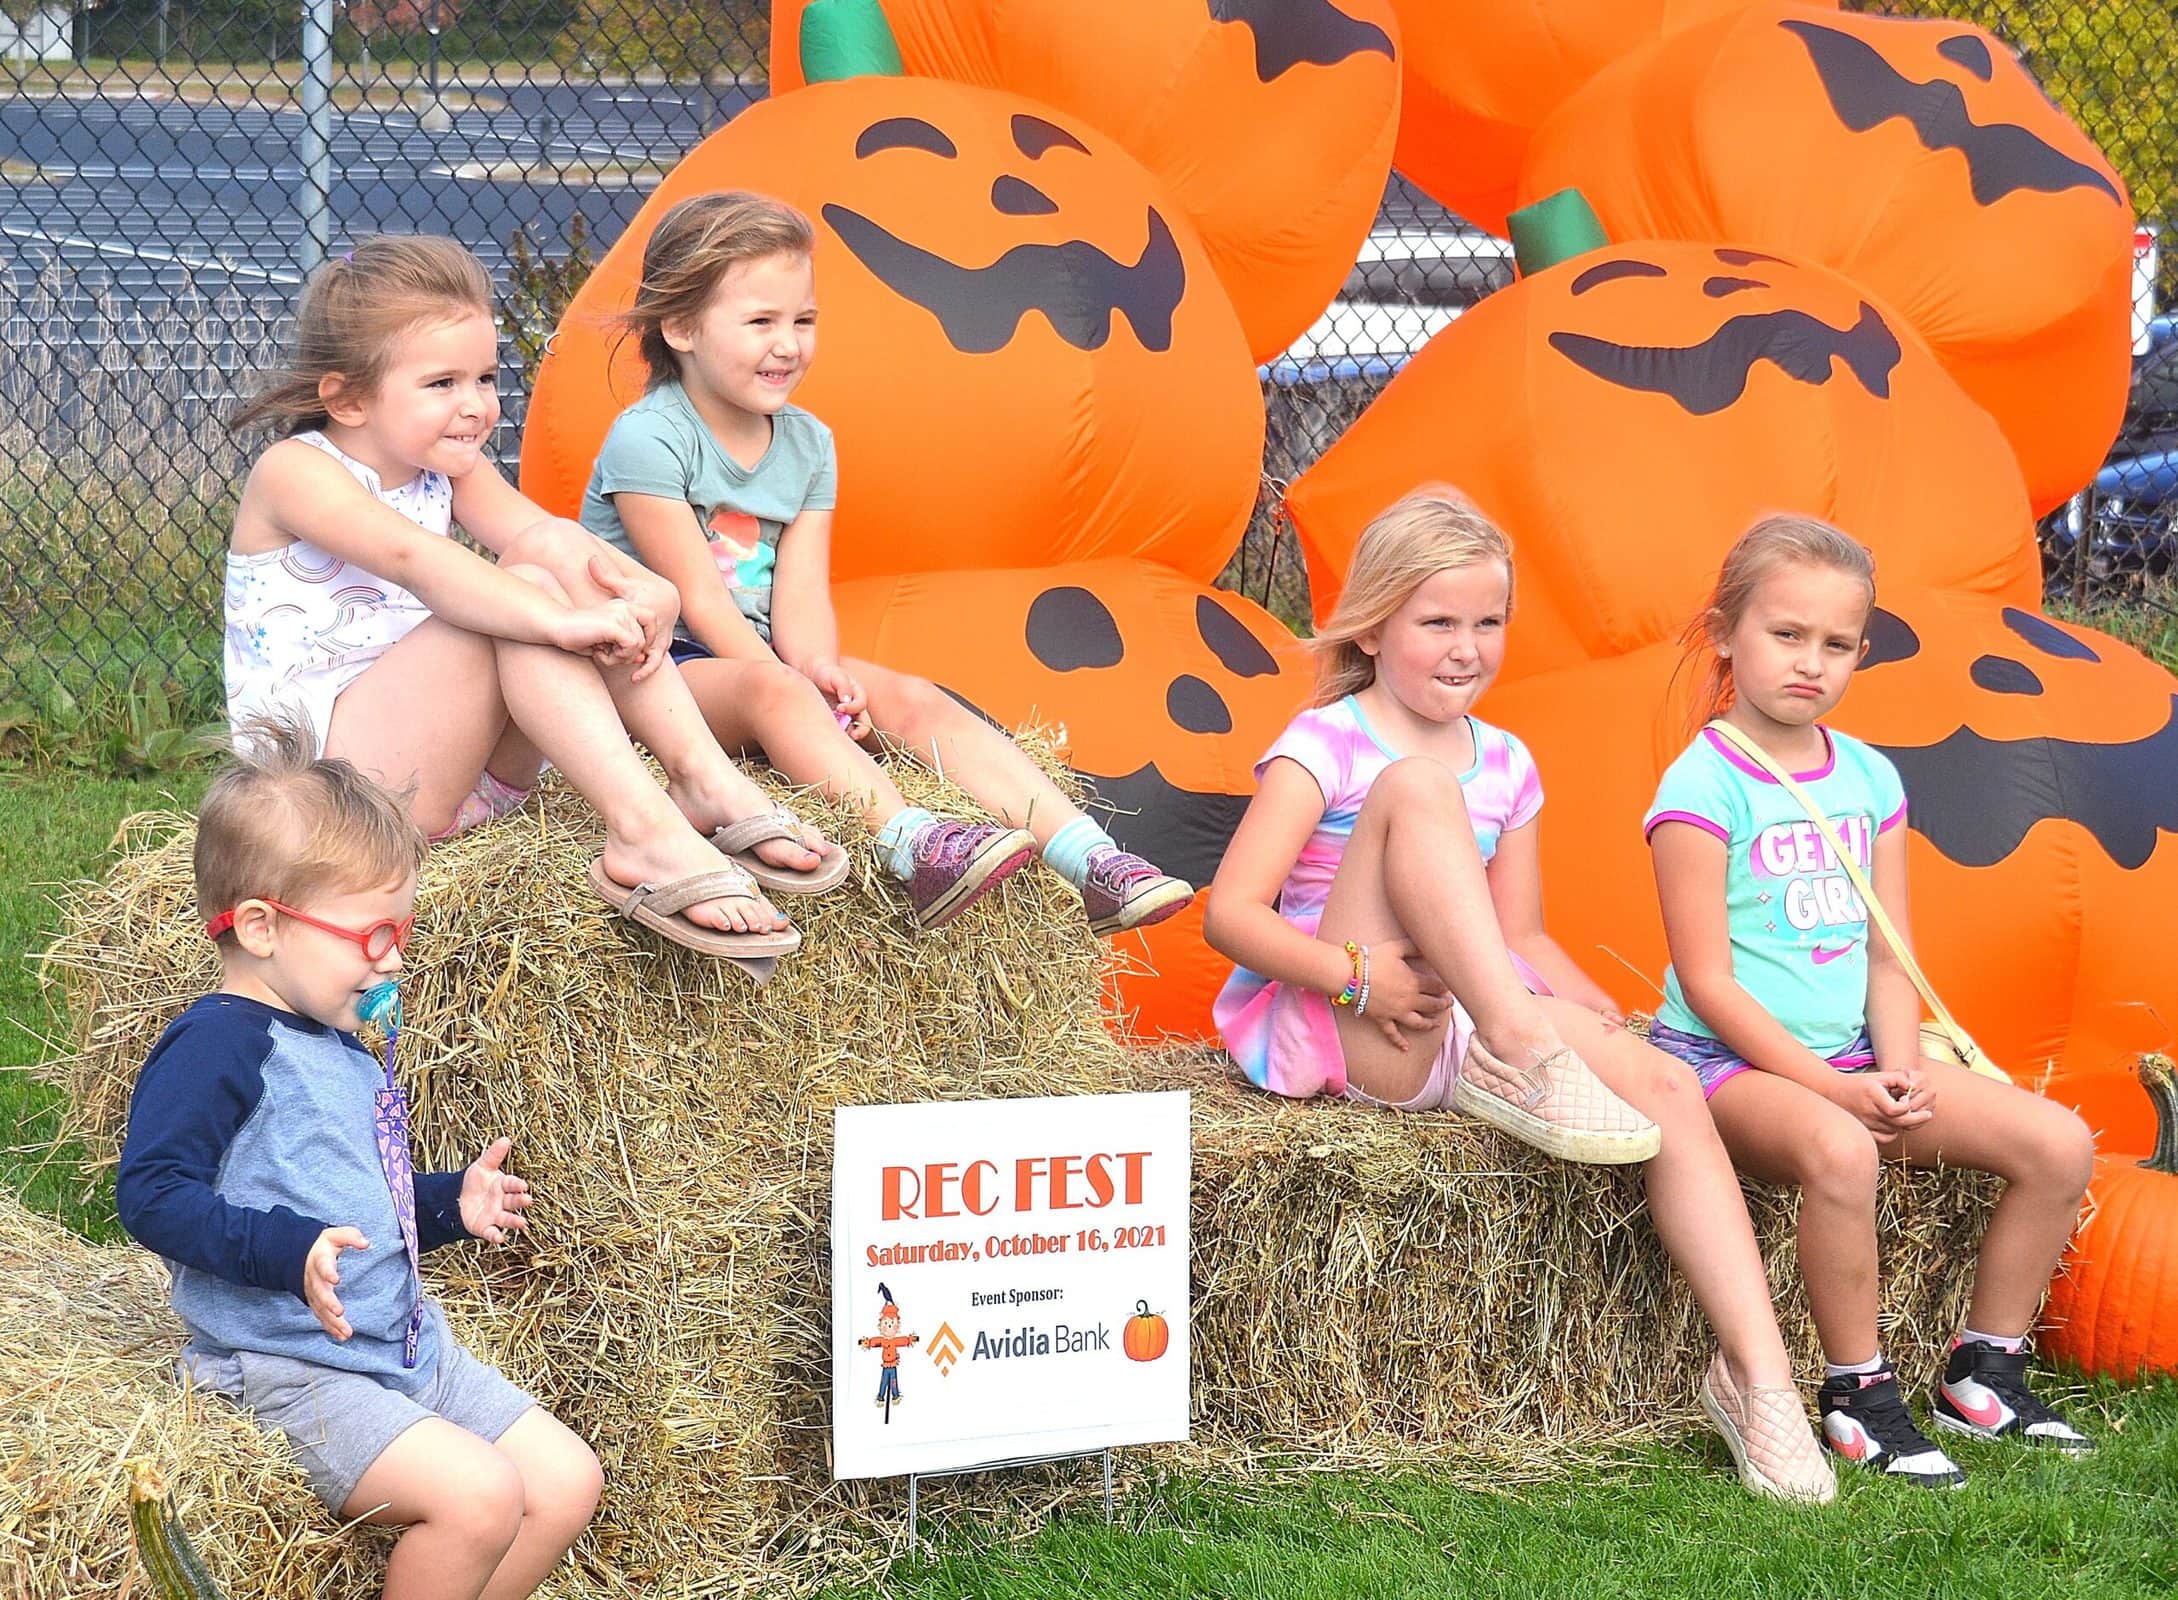 Hudson marks its 23rd fall community festival